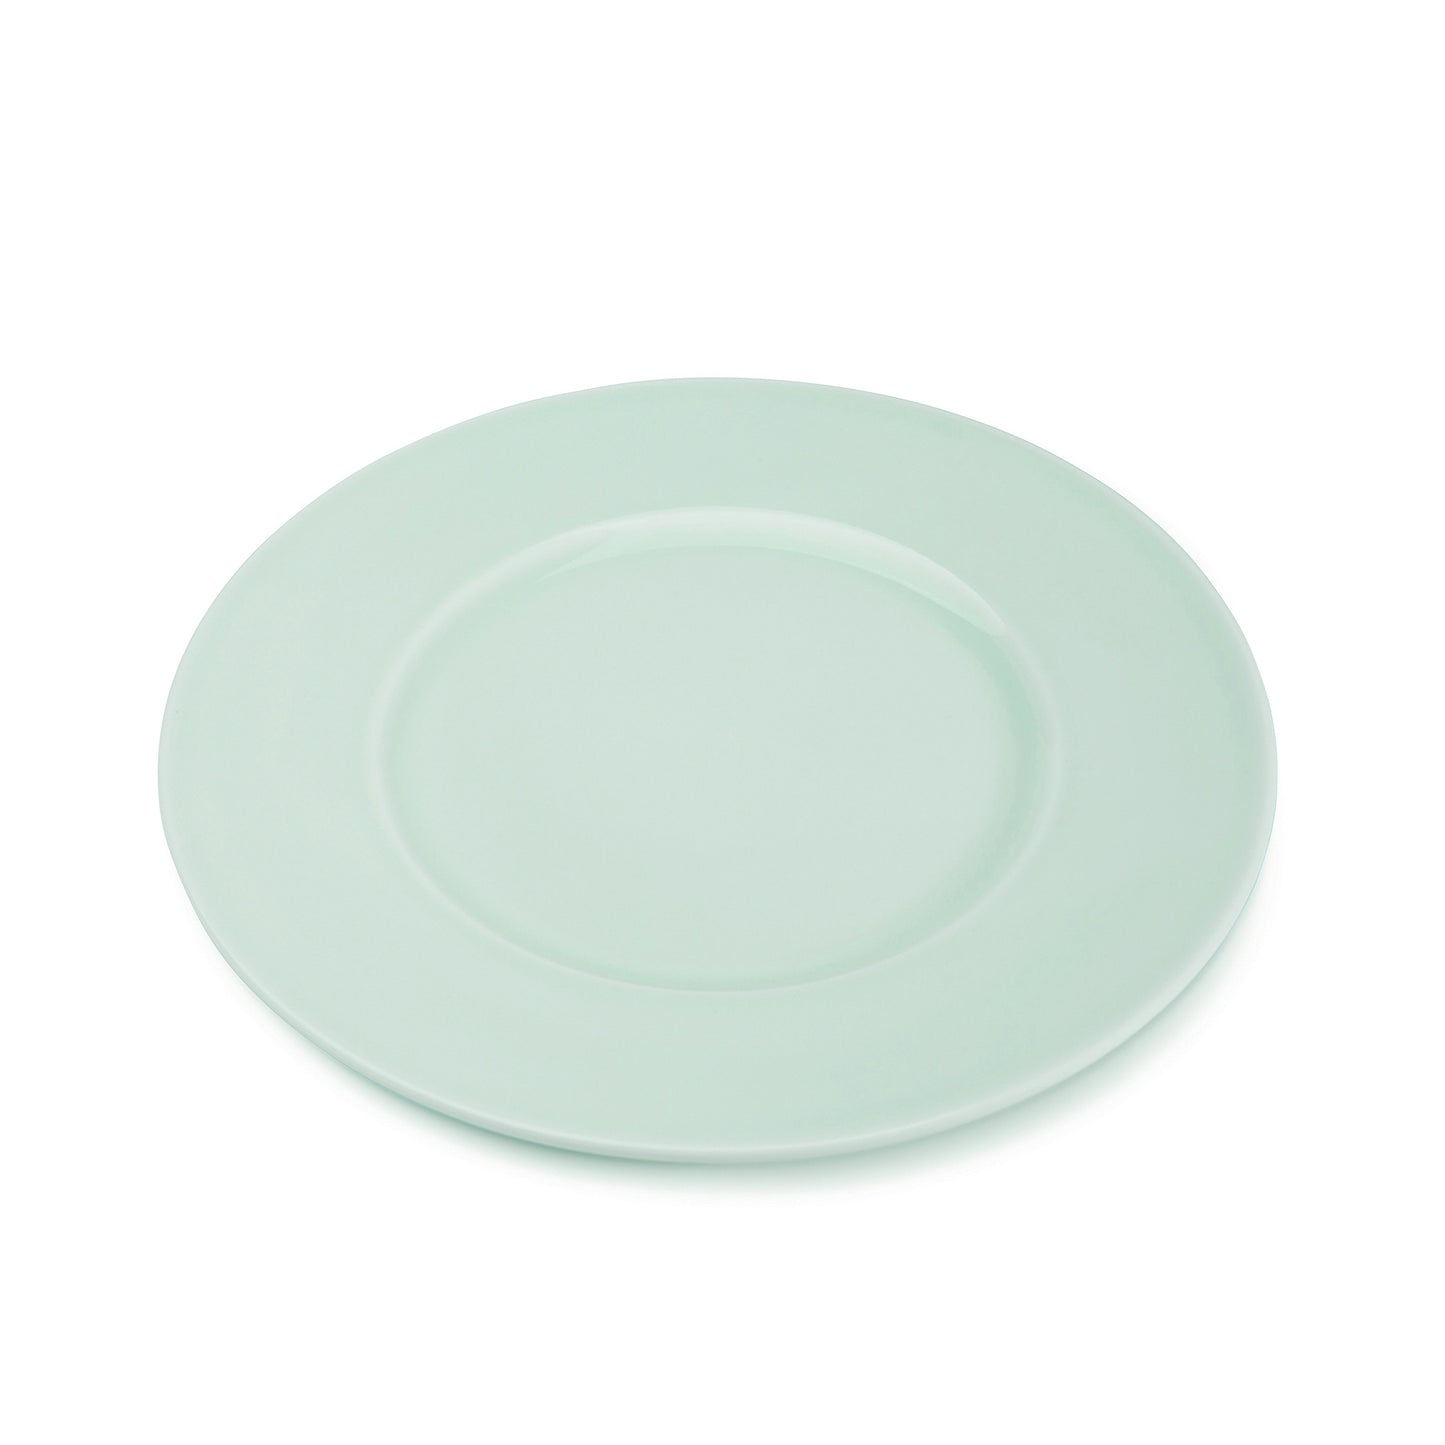 11 3/4" green celadon porcelain dinner plate, 45 degree angle view, media 3 of 4